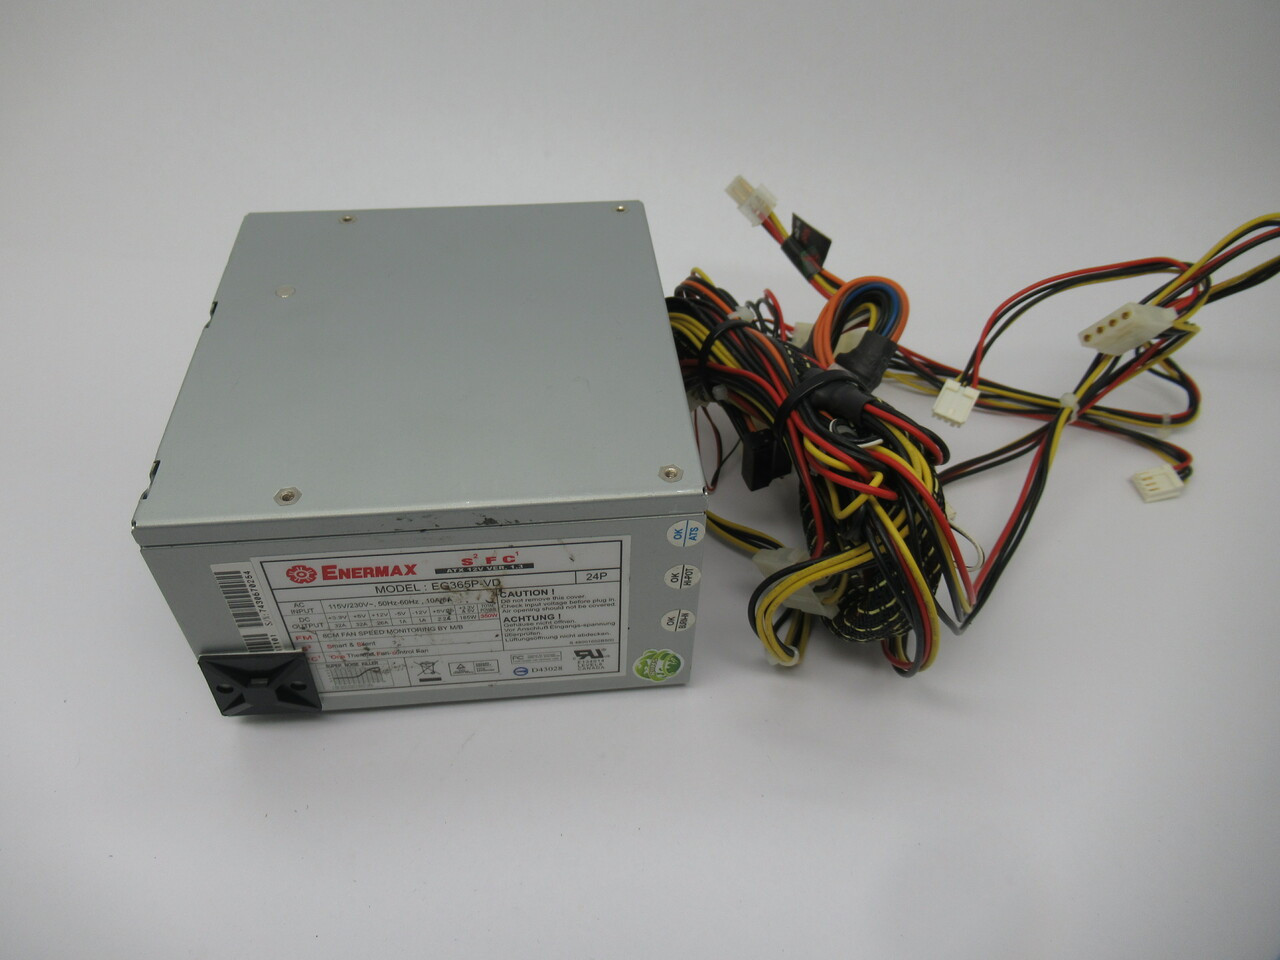 Enermax EG365P-VD Computer Power Supply 115/230VAC 350 Watt 50/60Hz 10A/6A USED